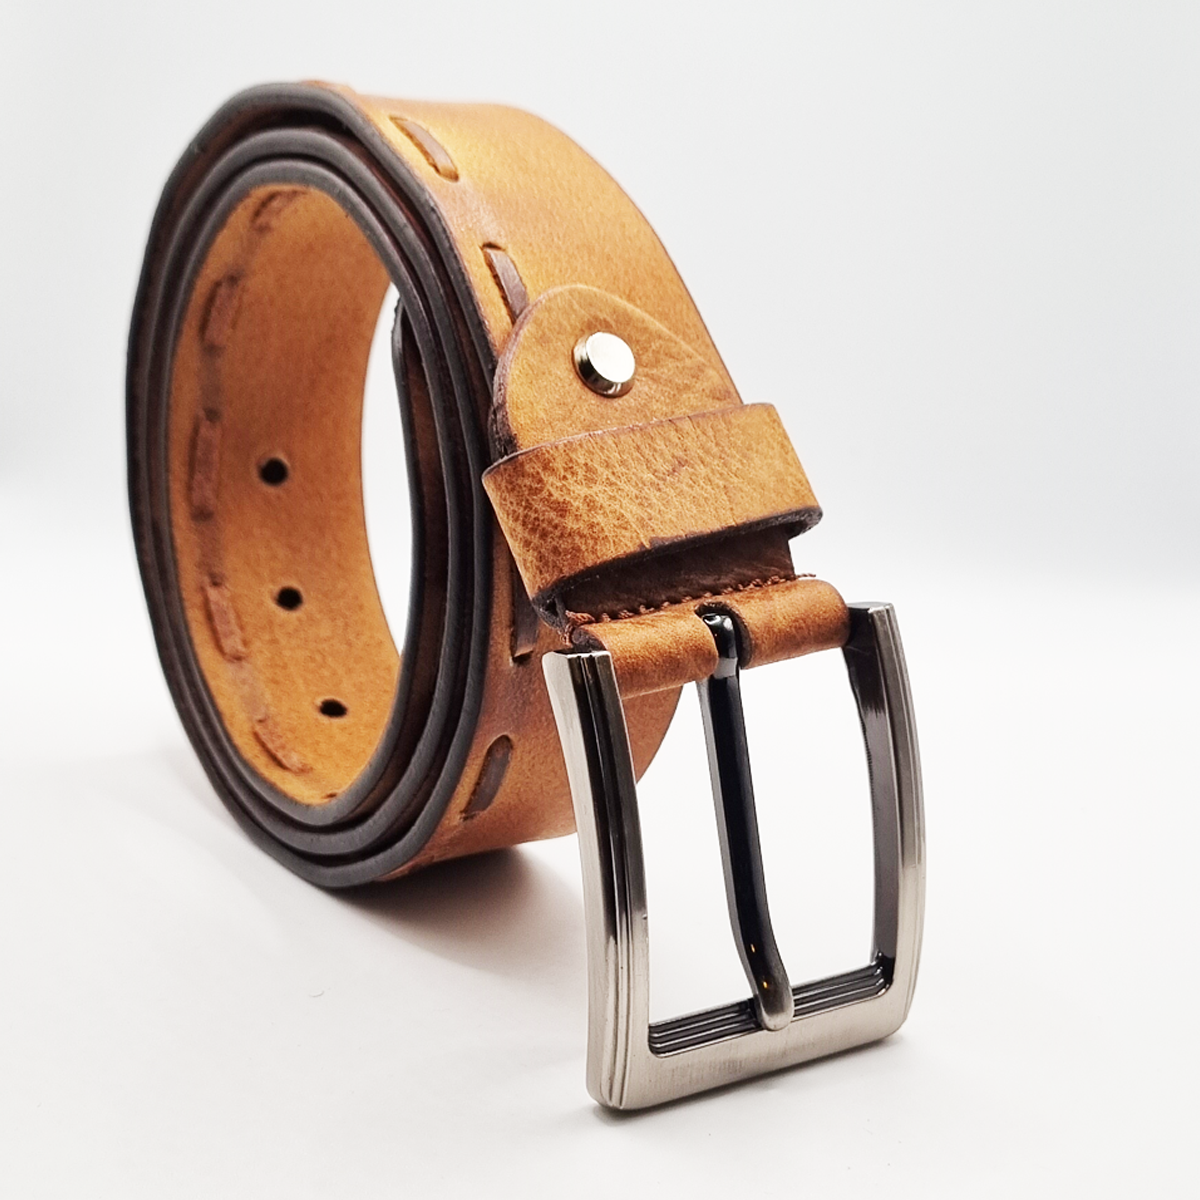 Laurence Olivier Genuine Premium Classic Leather Dress Belt - Brown